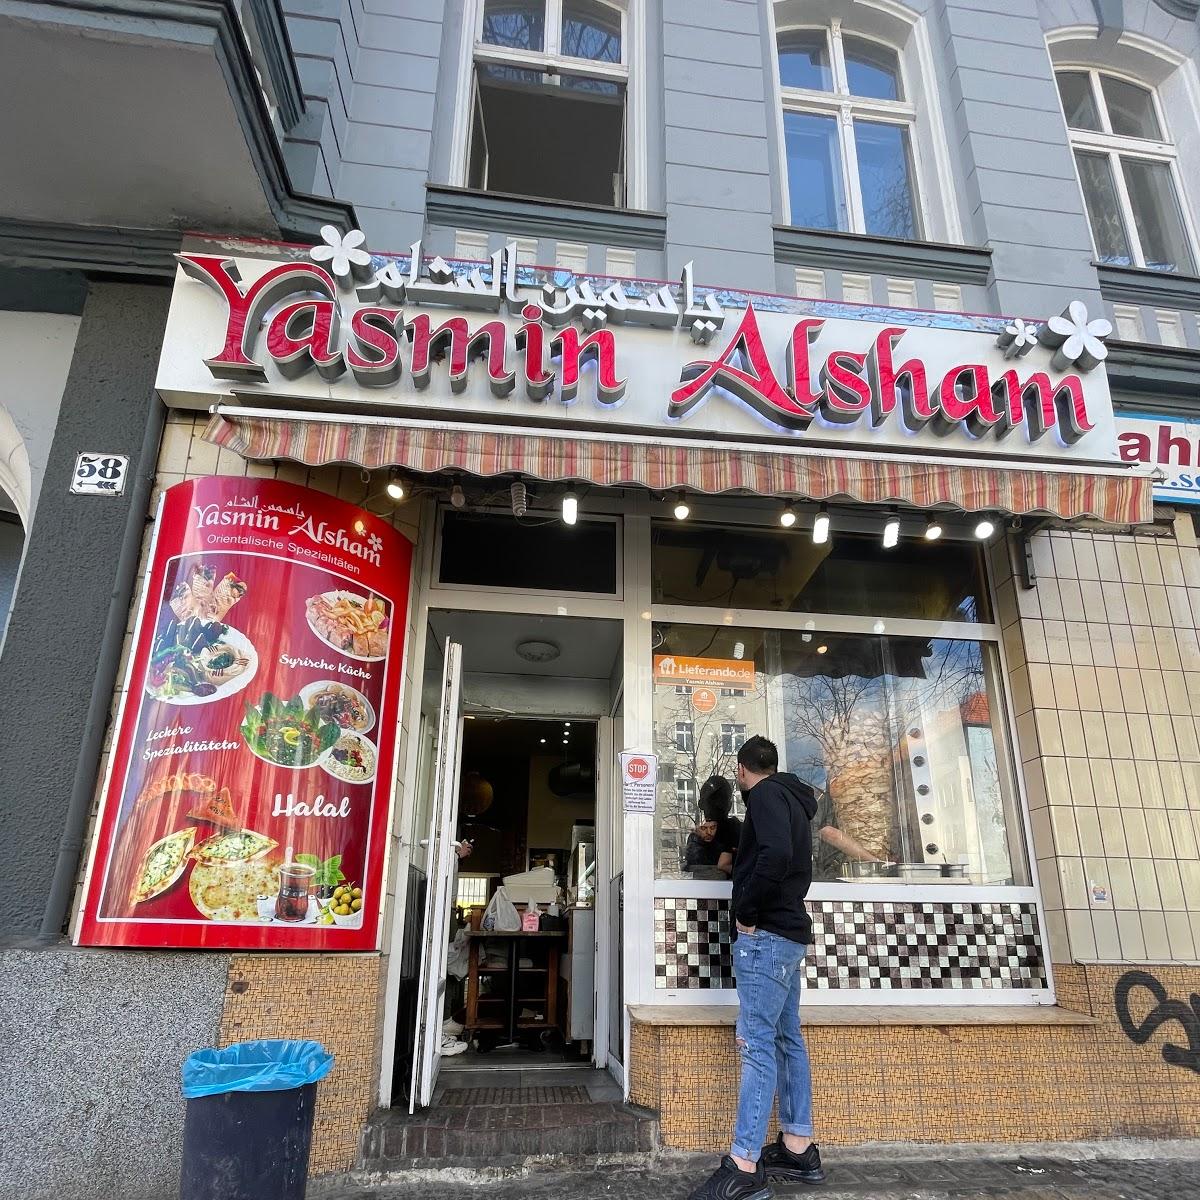 Restaurant "Yasmin Alsham" in Berlin